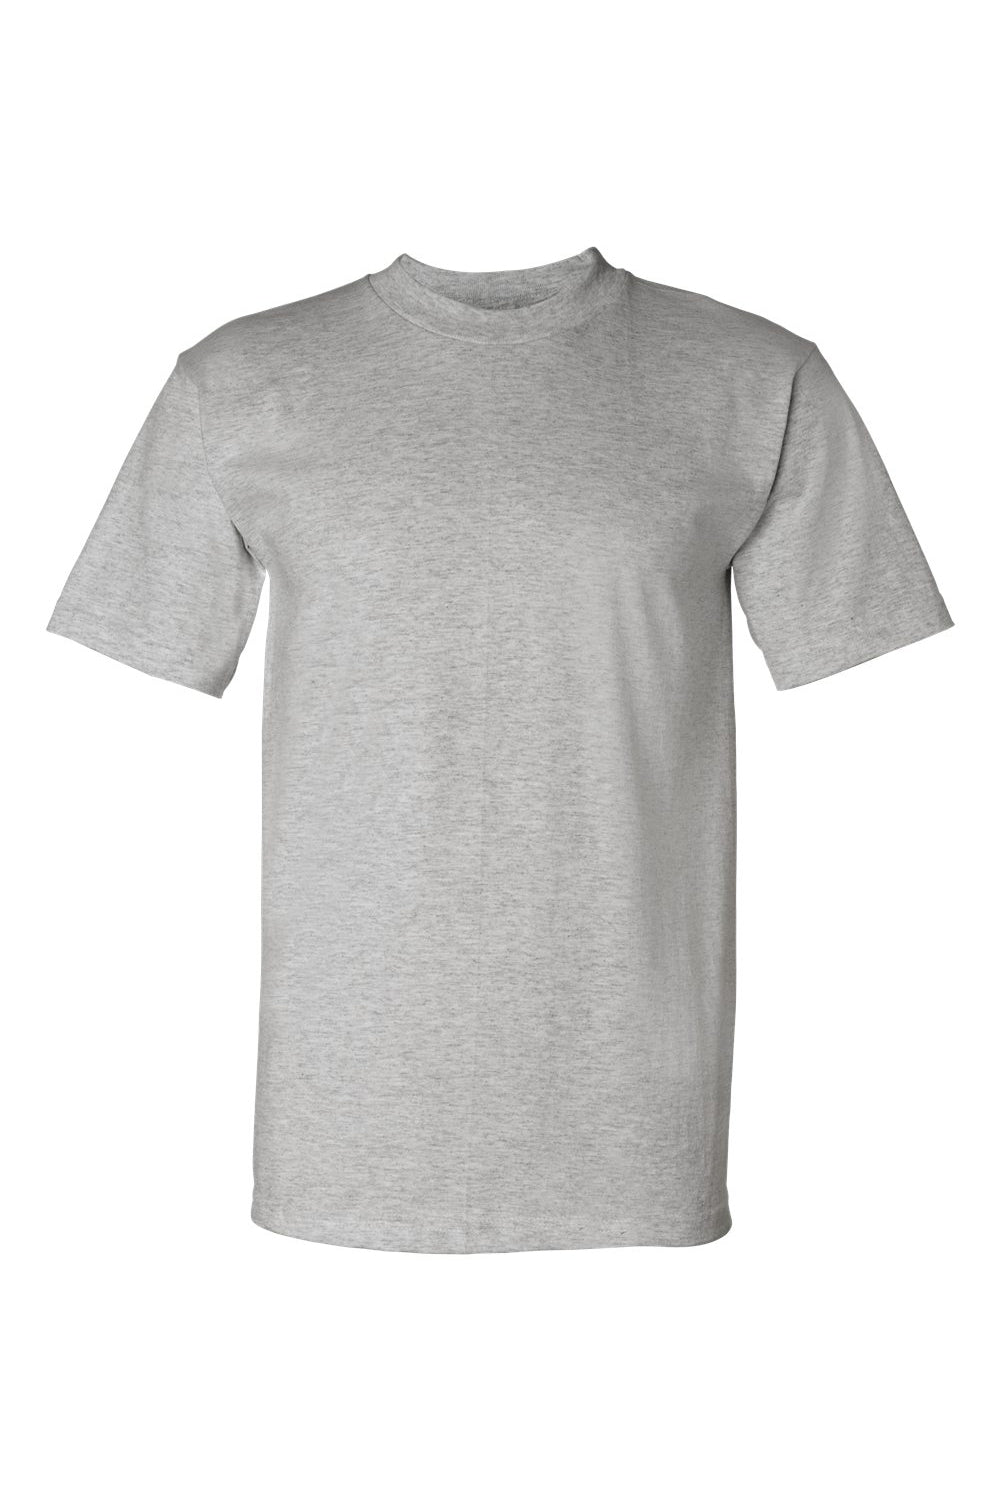 Bayside BA5100 Mens USA Made Short Sleeve Crewneck T-Shirt Dark Ash Grey Flat Front